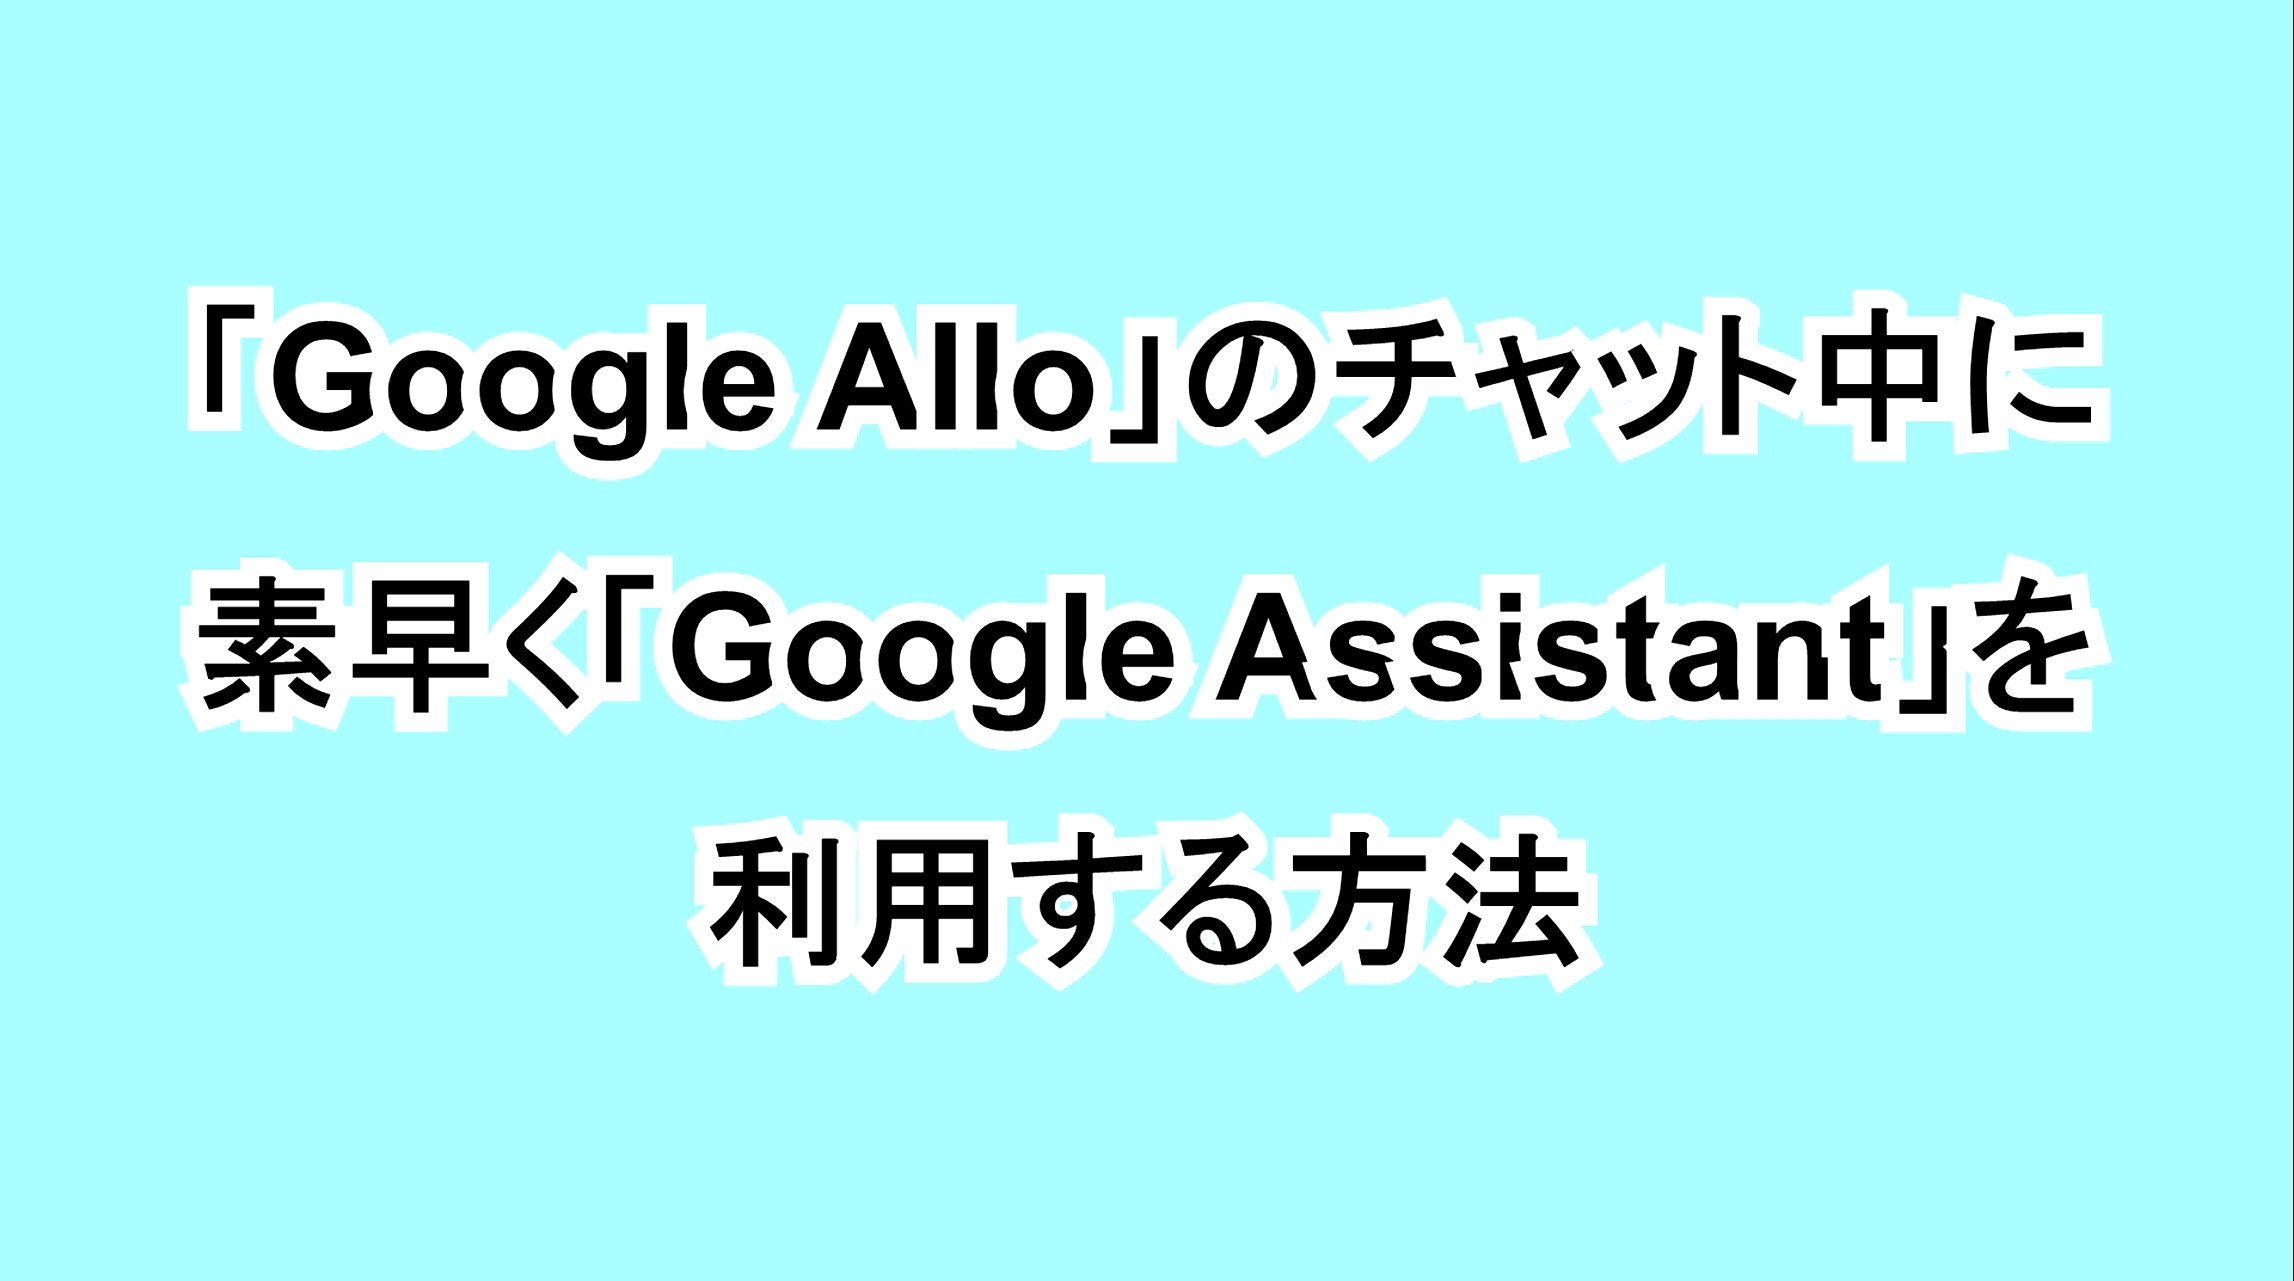 「Google Allo」のチャット中に素早く「Google Assistant」を利用する方法